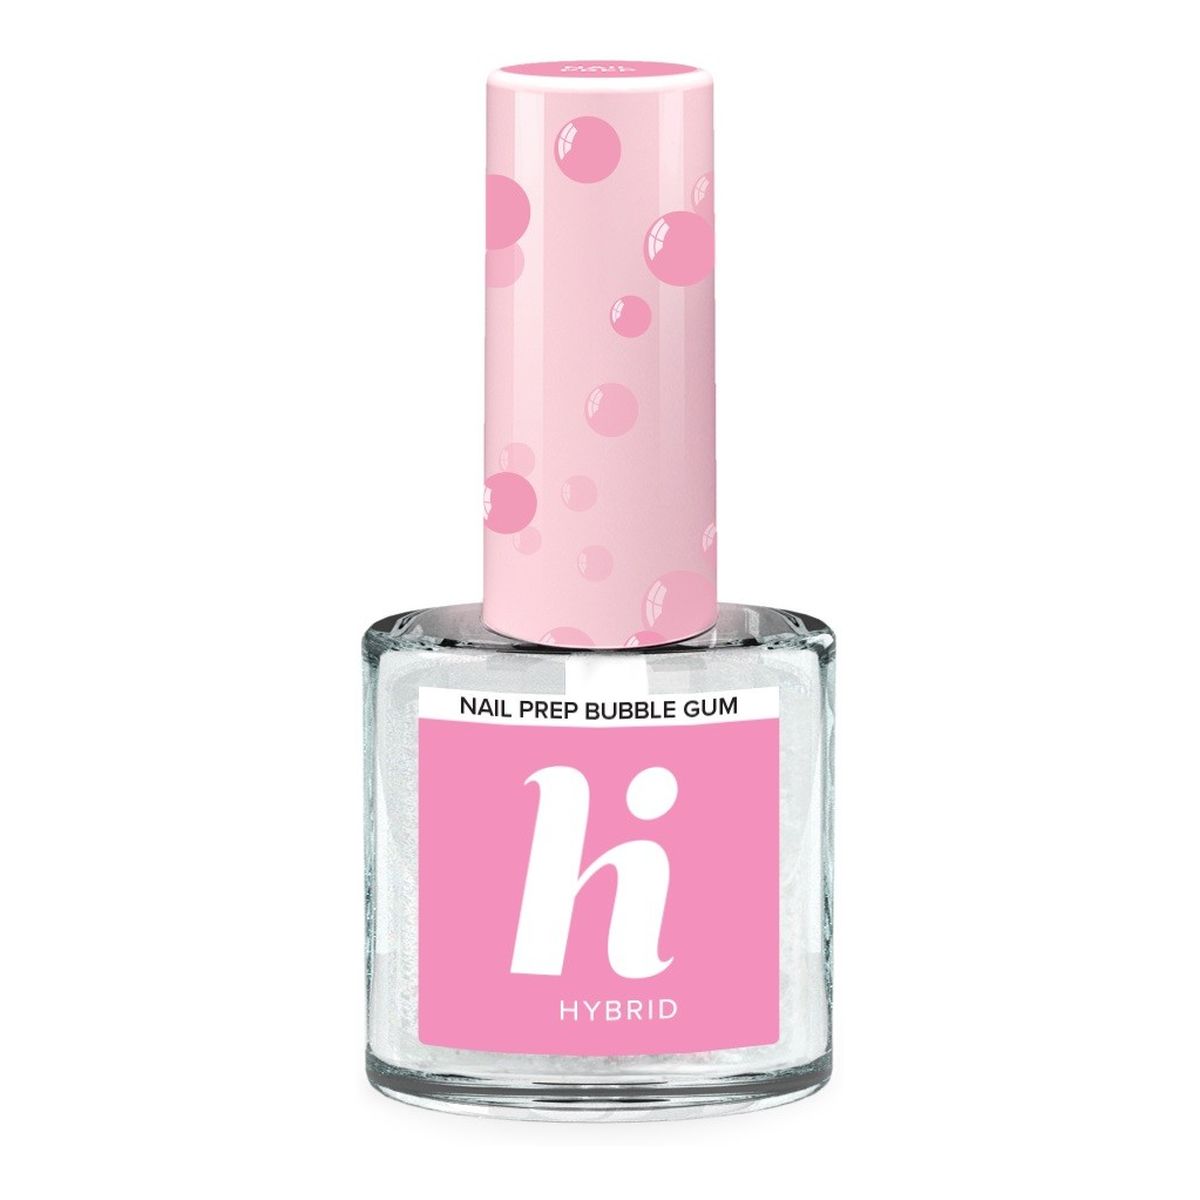 Hi Hybrid Hi hybryd nail prep bubblegum preparat odtłuszczający 5 ml